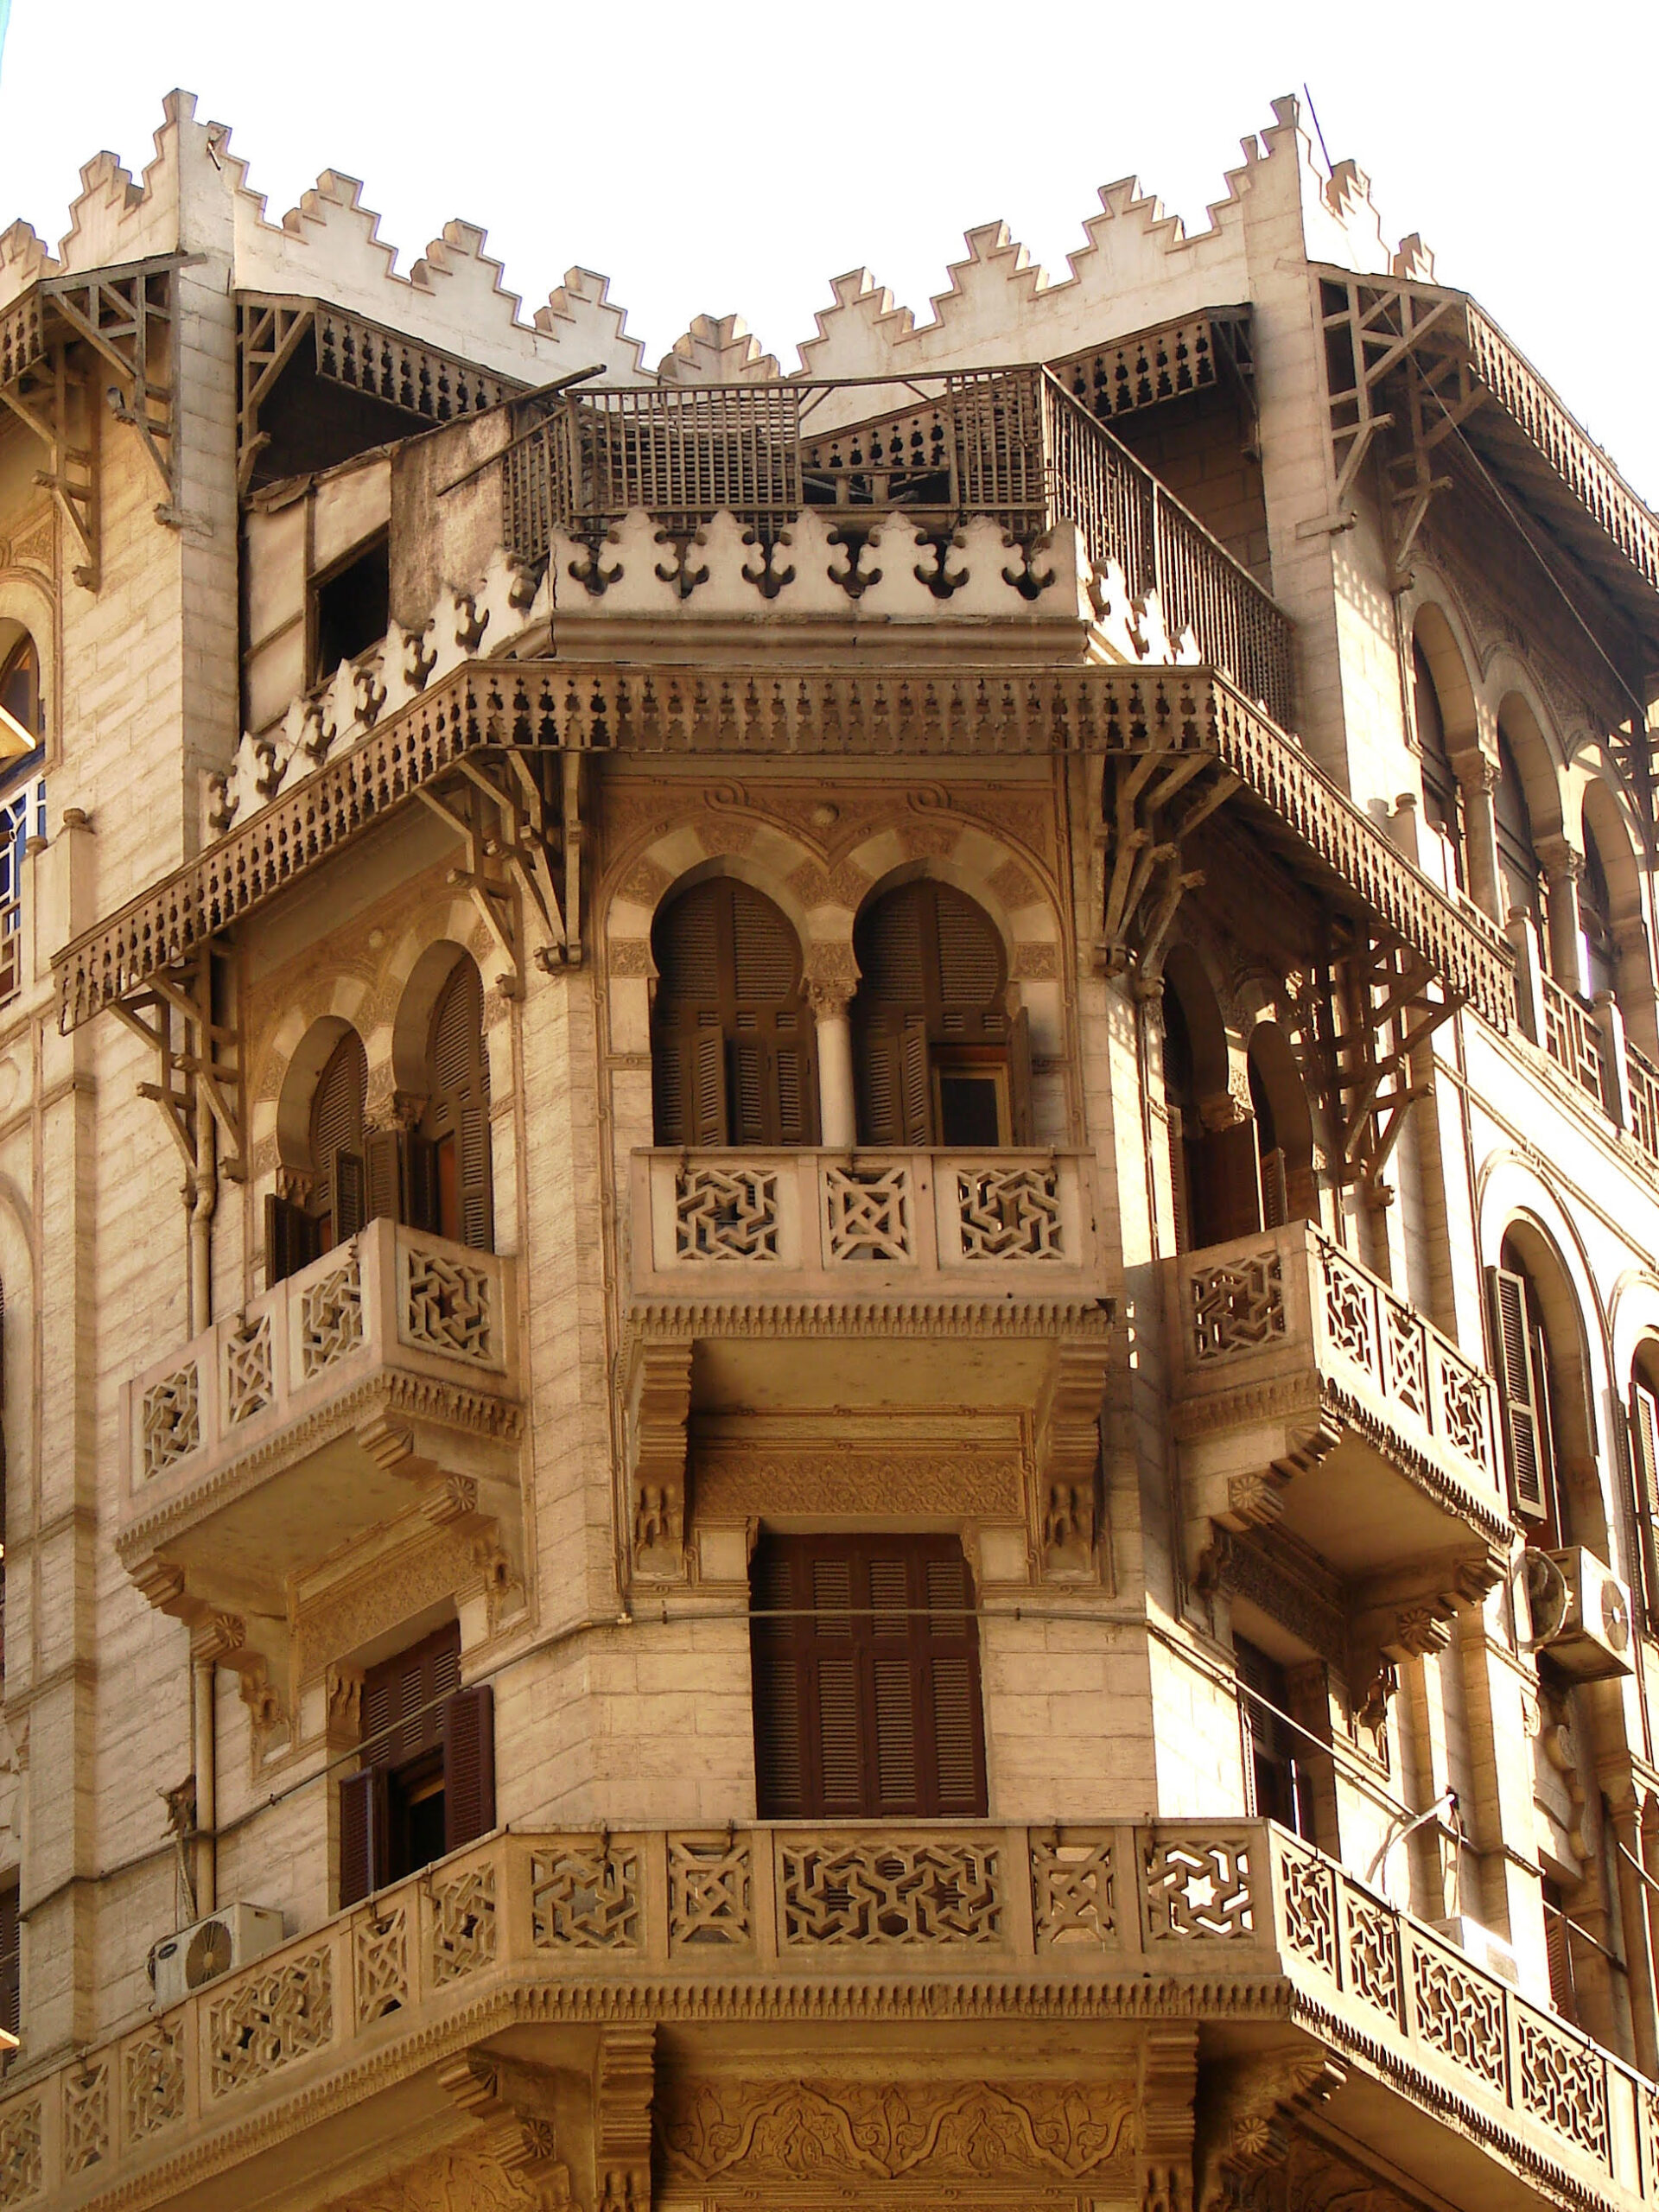 Downtown Cairo: Any hope for regaining past splendour? 